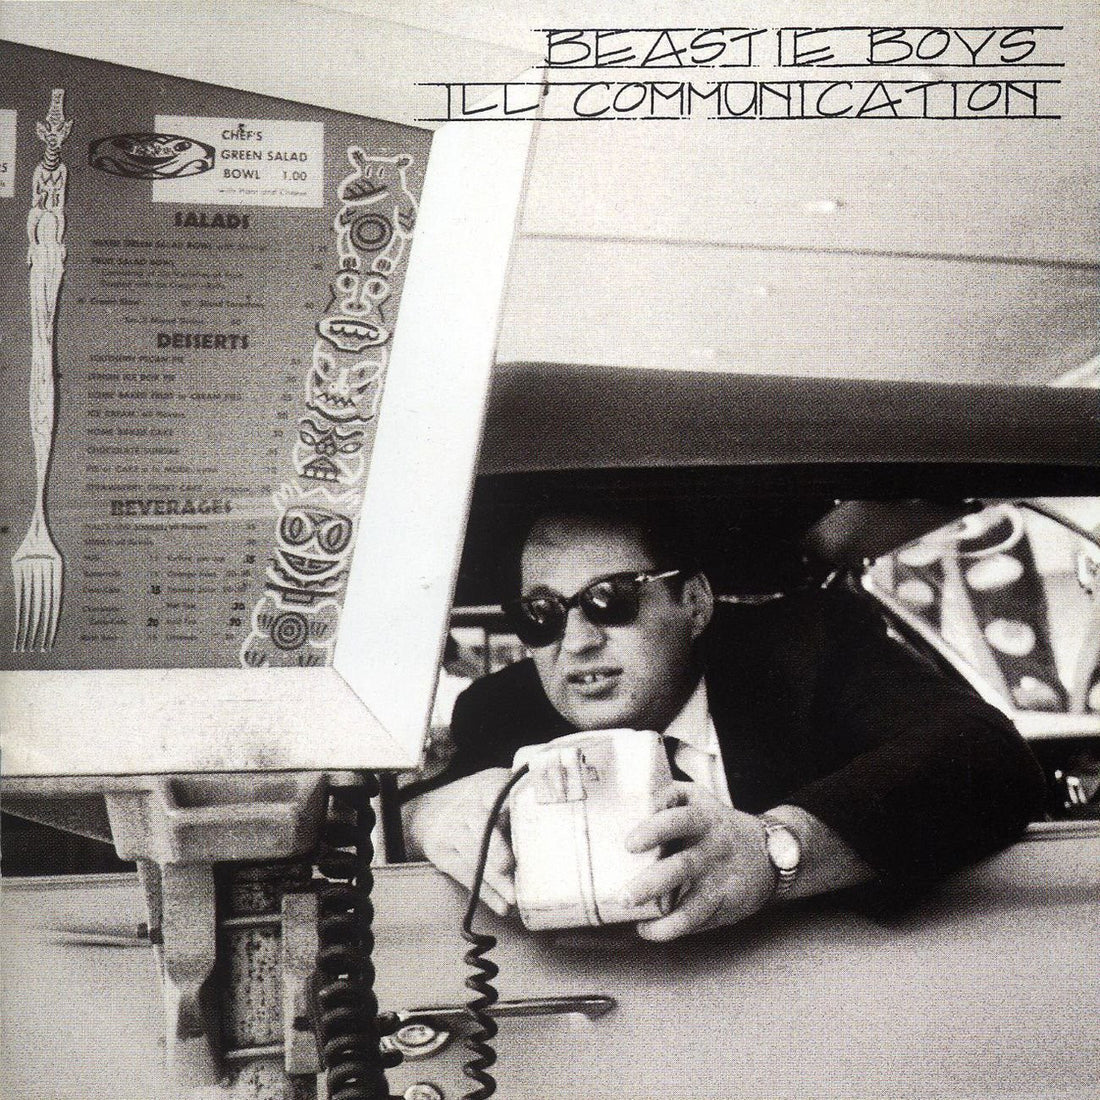 Beastie Boys "Ill Communication" 2xLP 180 gram Vinyl